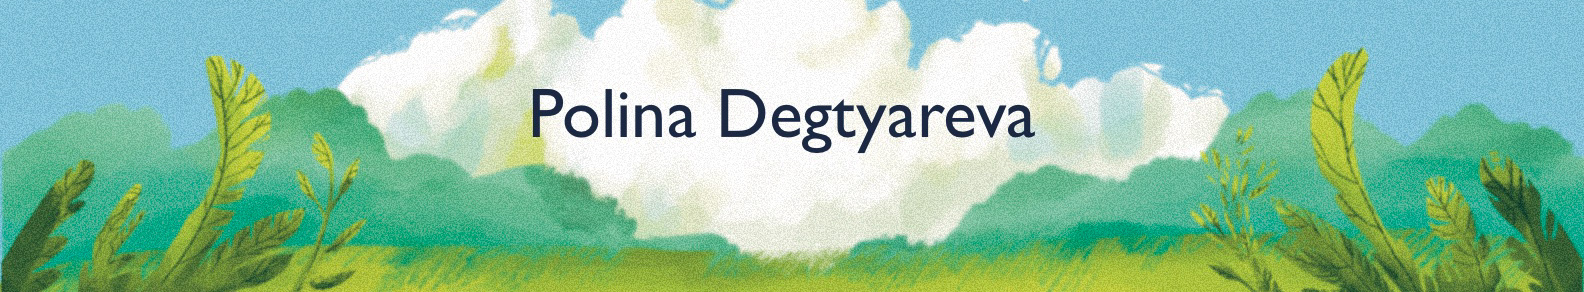 Polina Degtyareva's profile banner